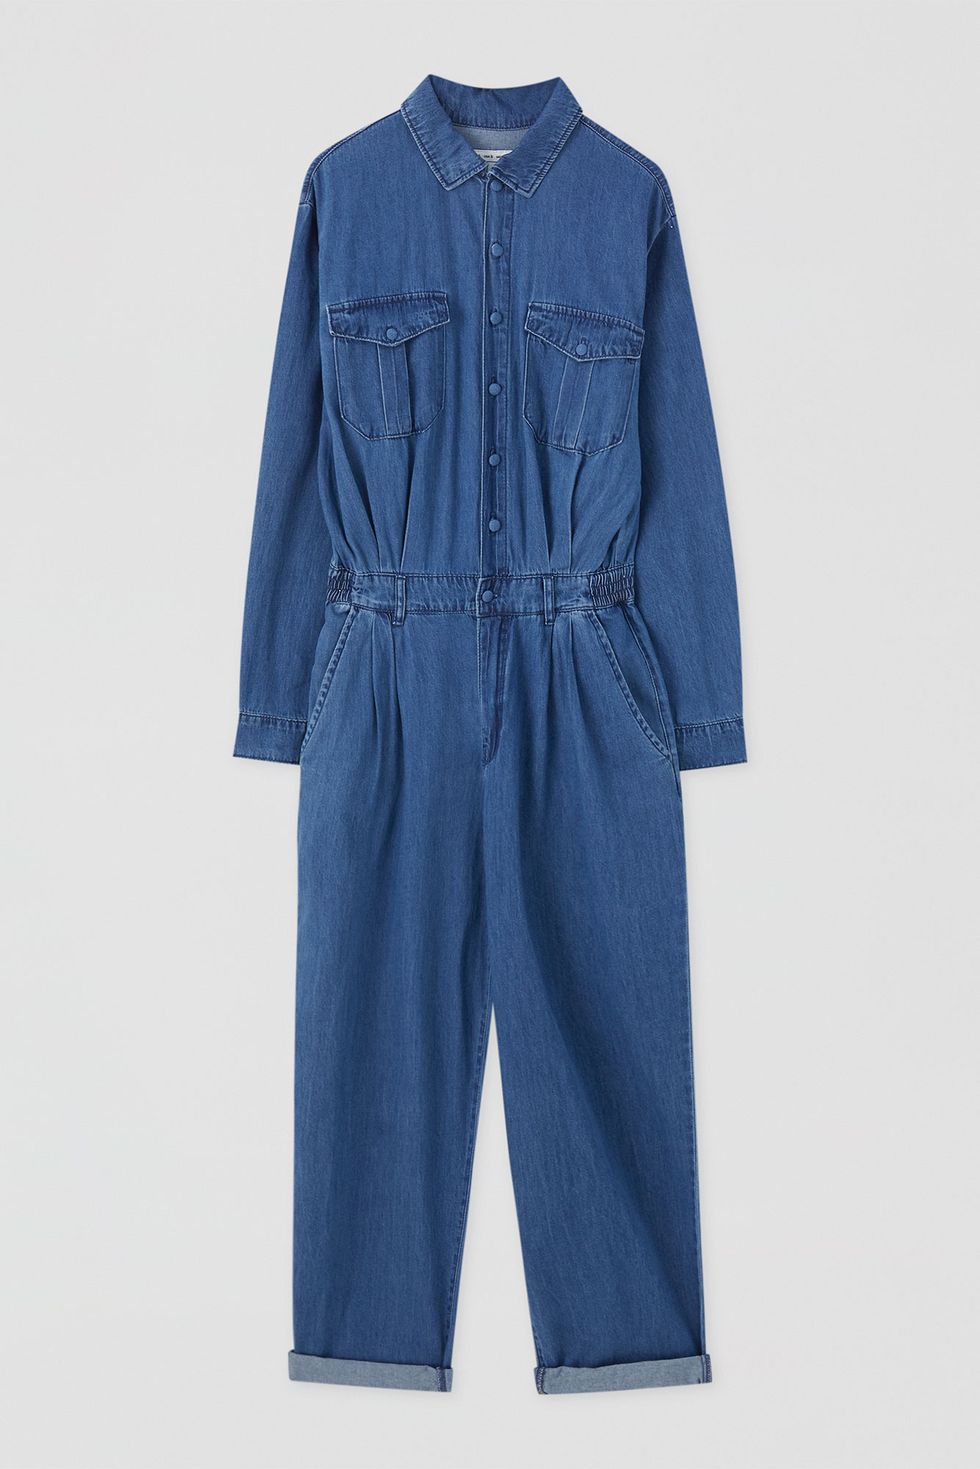 Clothing, Blue, Denim, One-piece garment, Sleeve, Outerwear, Textile, Electric blue, Jeans, Pocket, 